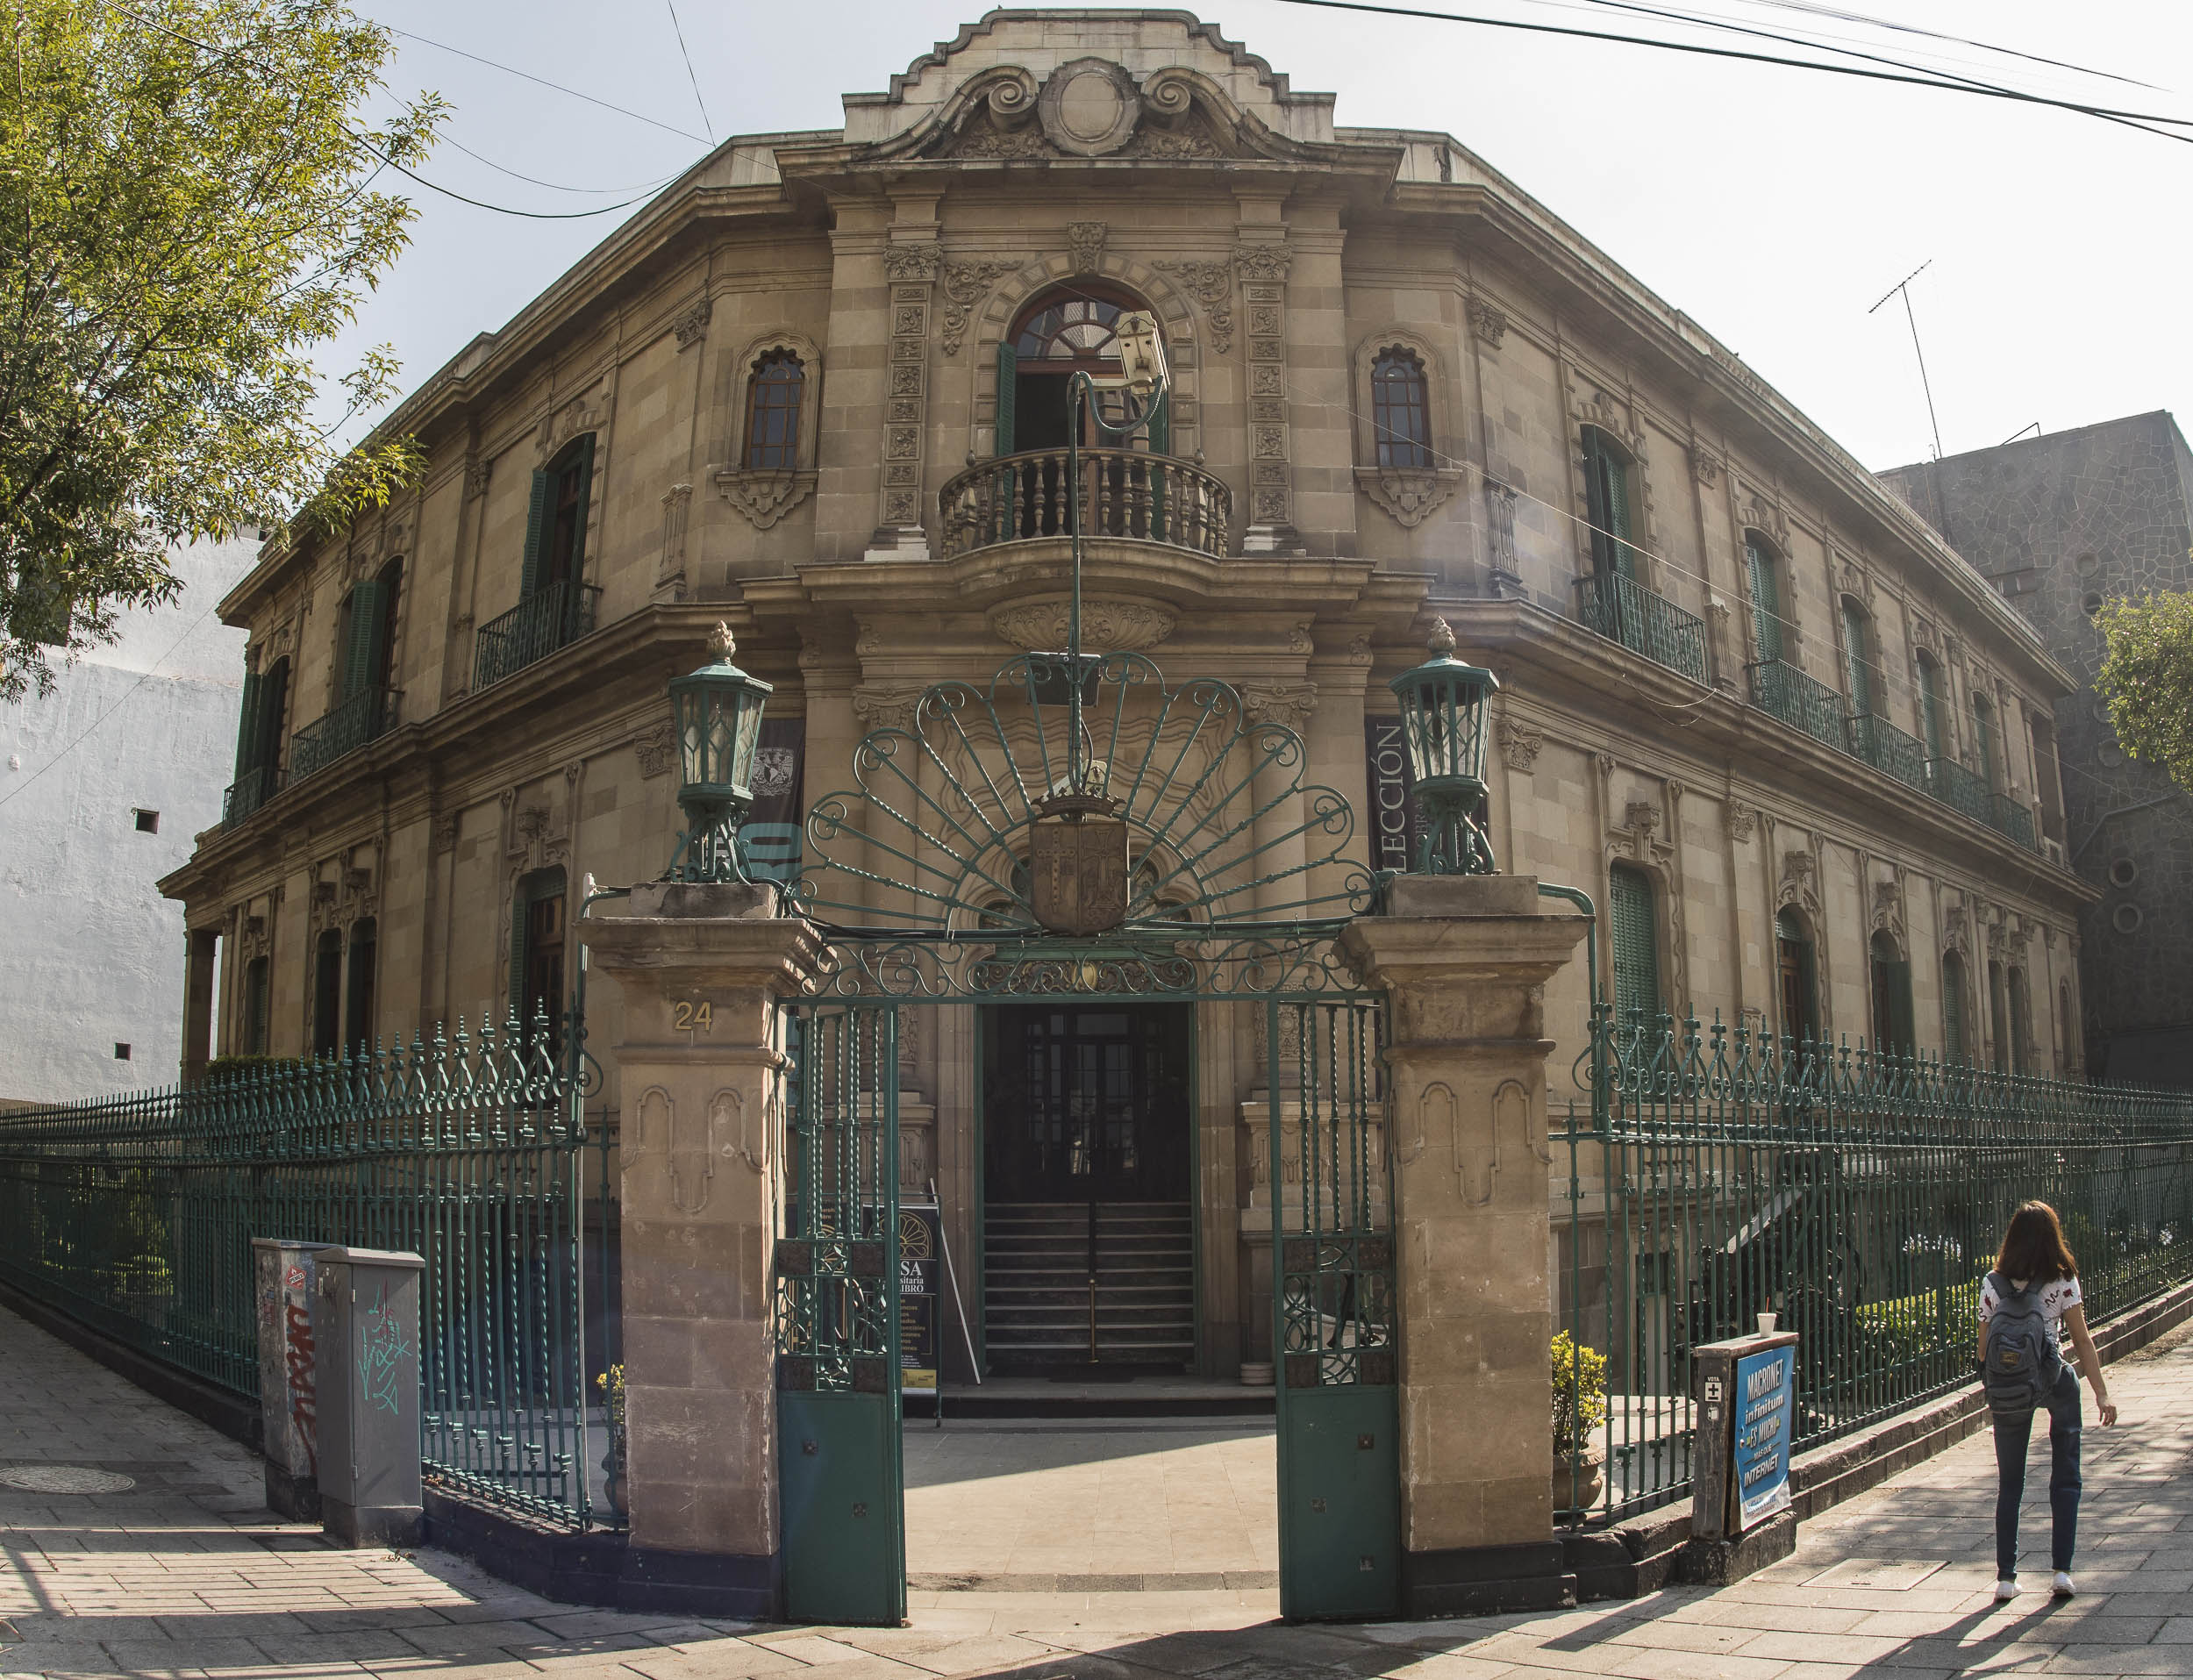 The front part of Casa Universitaria Del Libro building